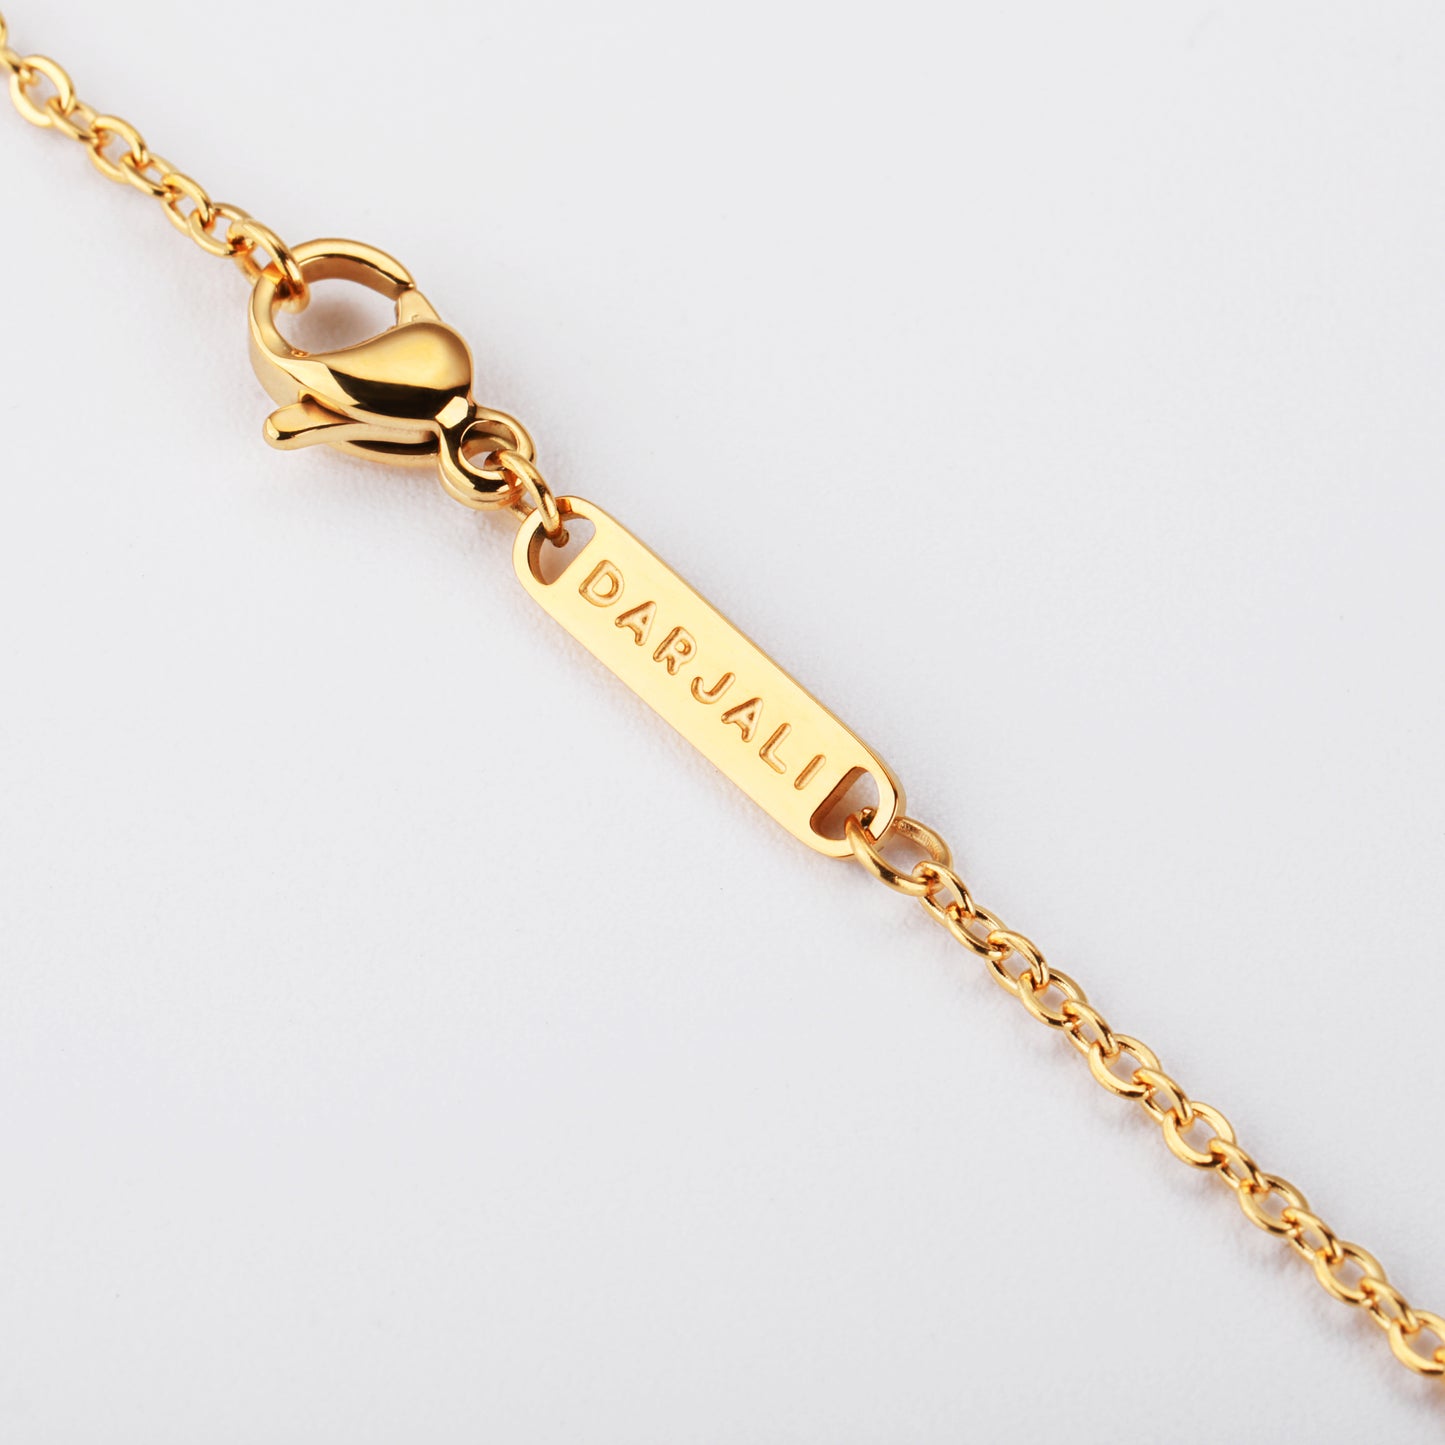 Darjali Jewelry Botanical Moon Necklace 18K Gold Chain